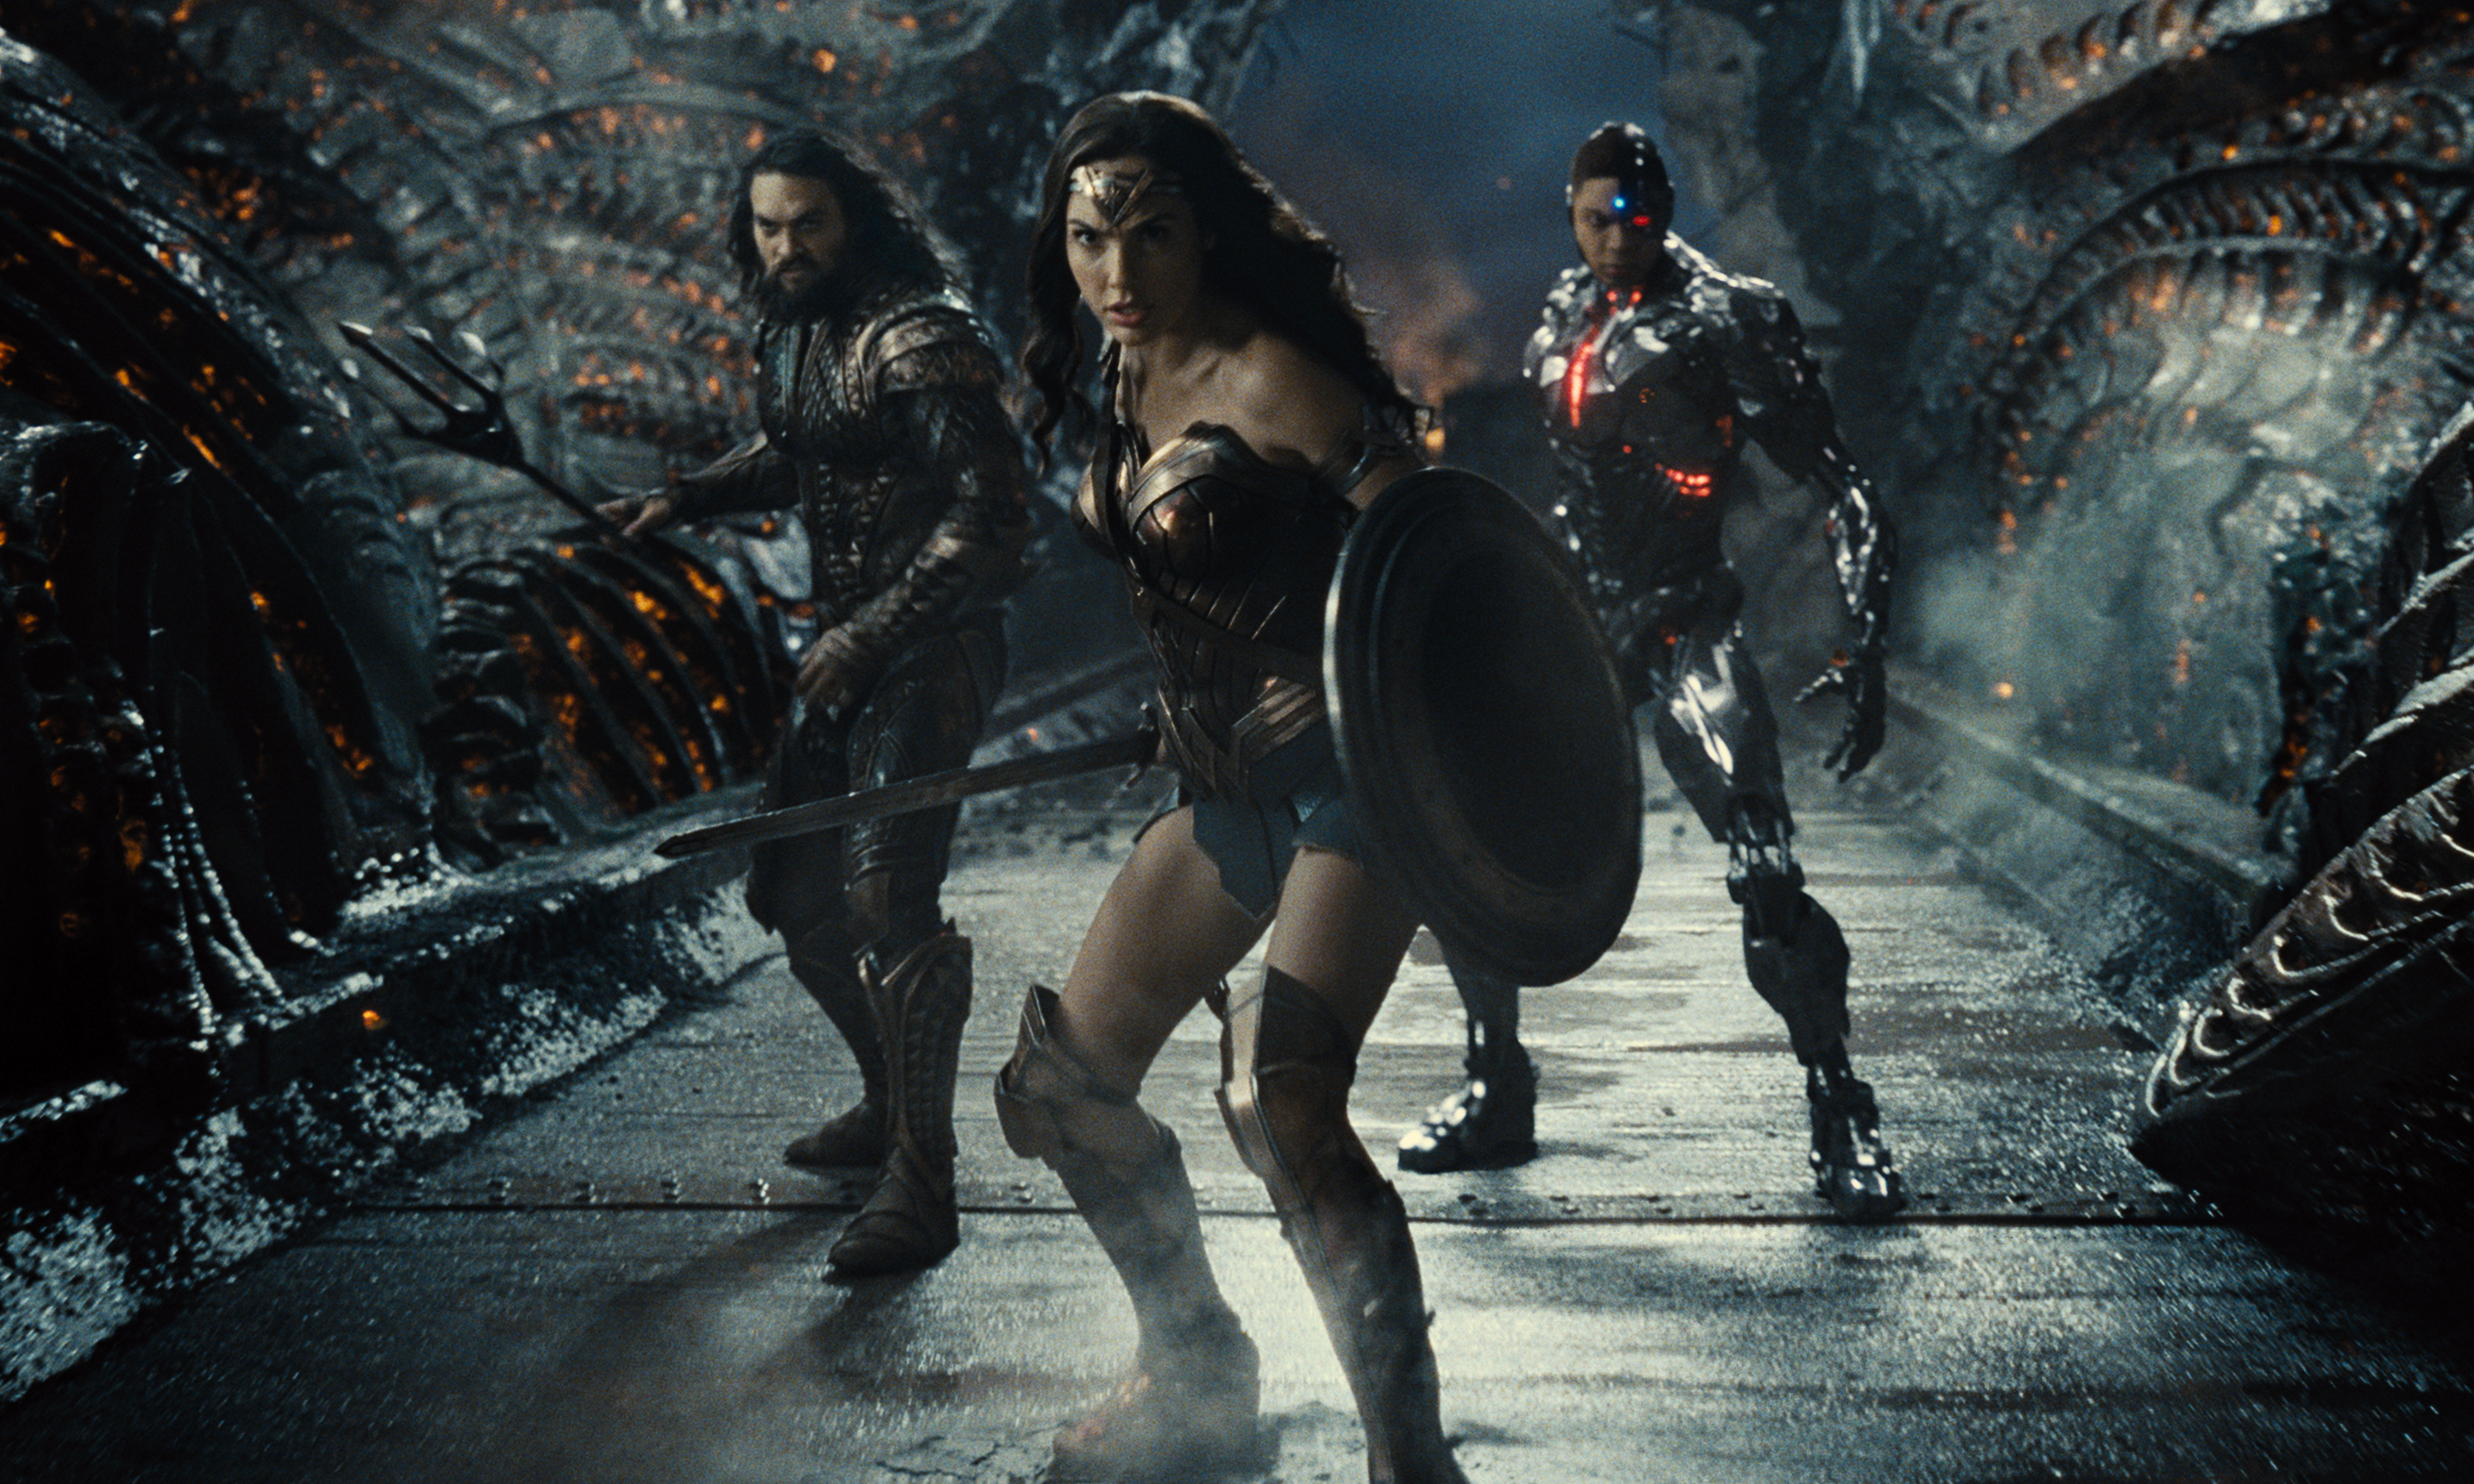 EXCLUSIVE INTERVIEW: Deborah Snyder Talks 'Justice League' and Female Representation